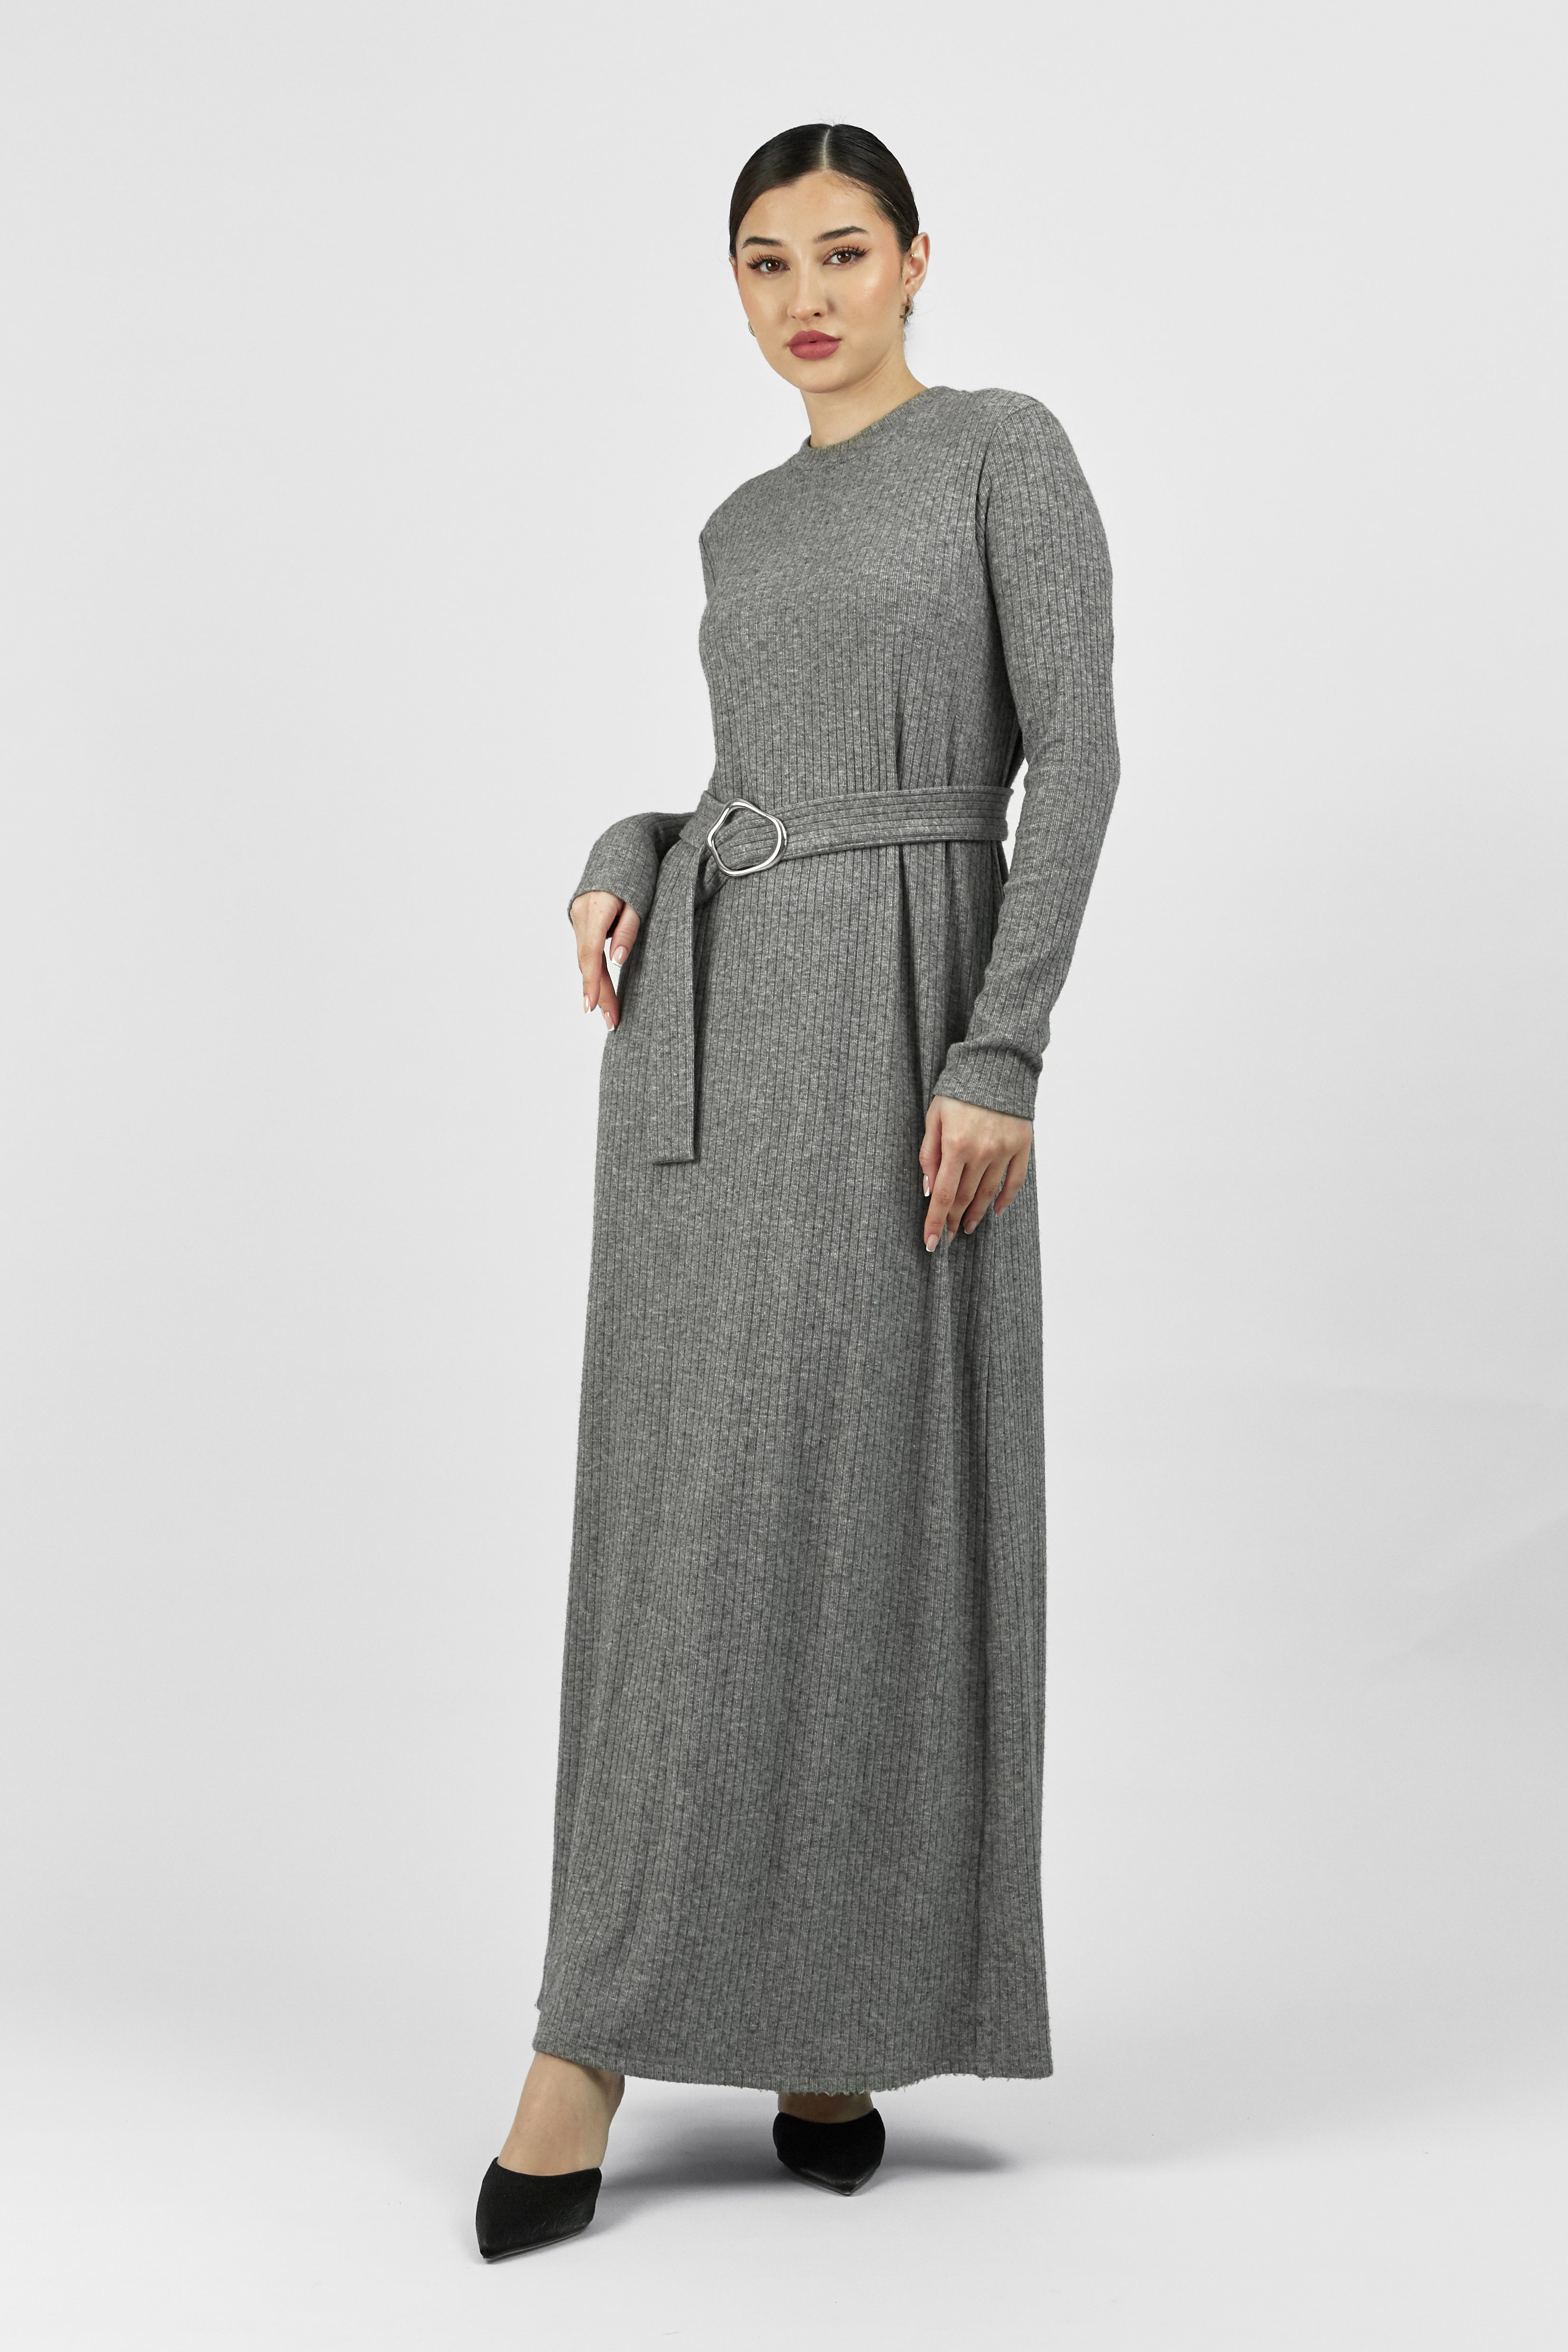 CA - Belted Knit Dress - Heather Grey